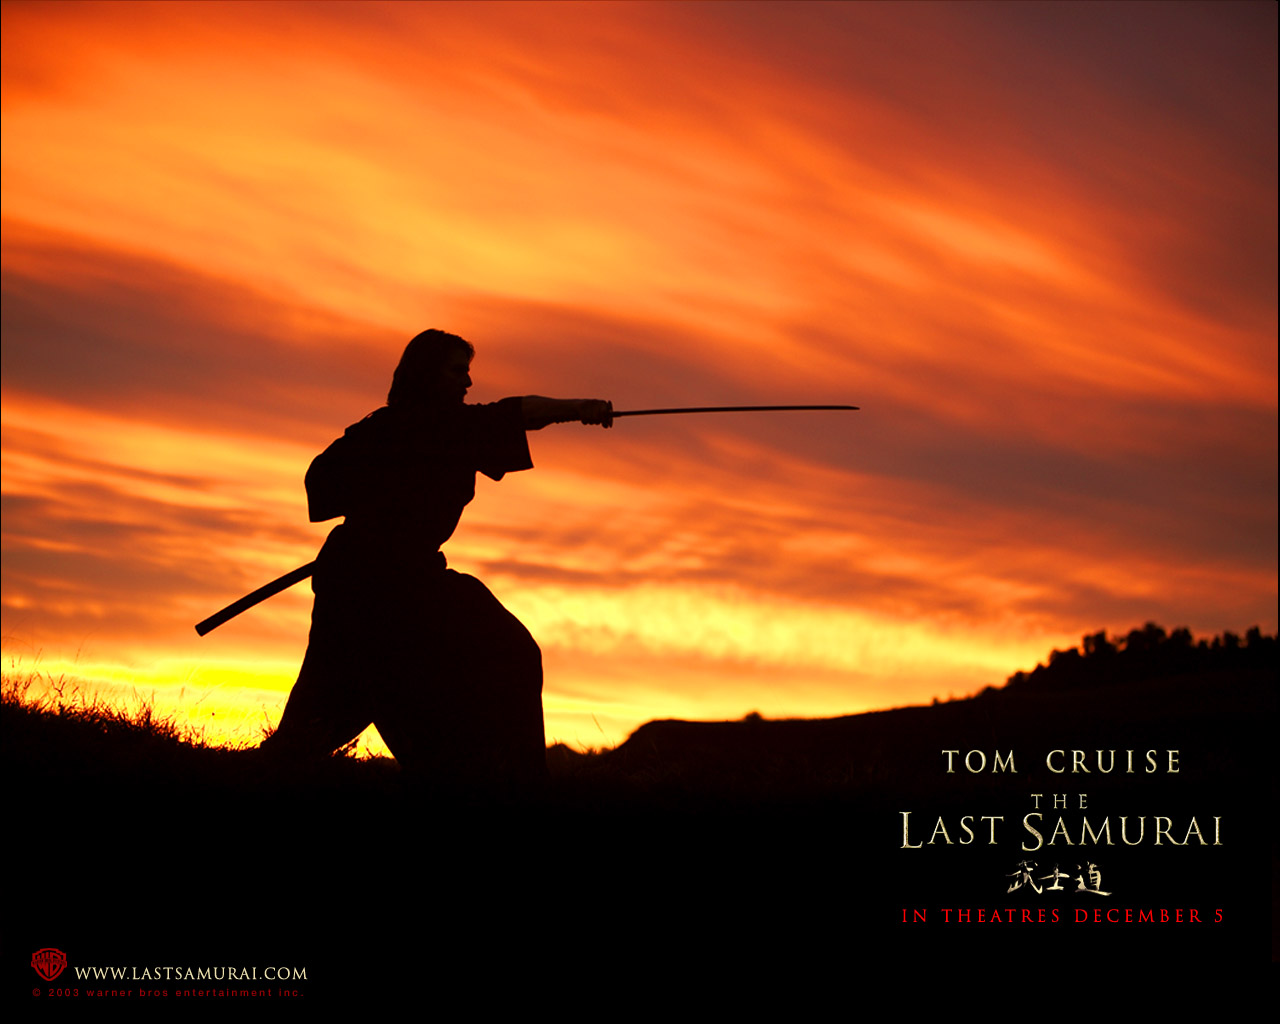 Download full size The Last Samurai wallpaper / Movies / 1280x1024